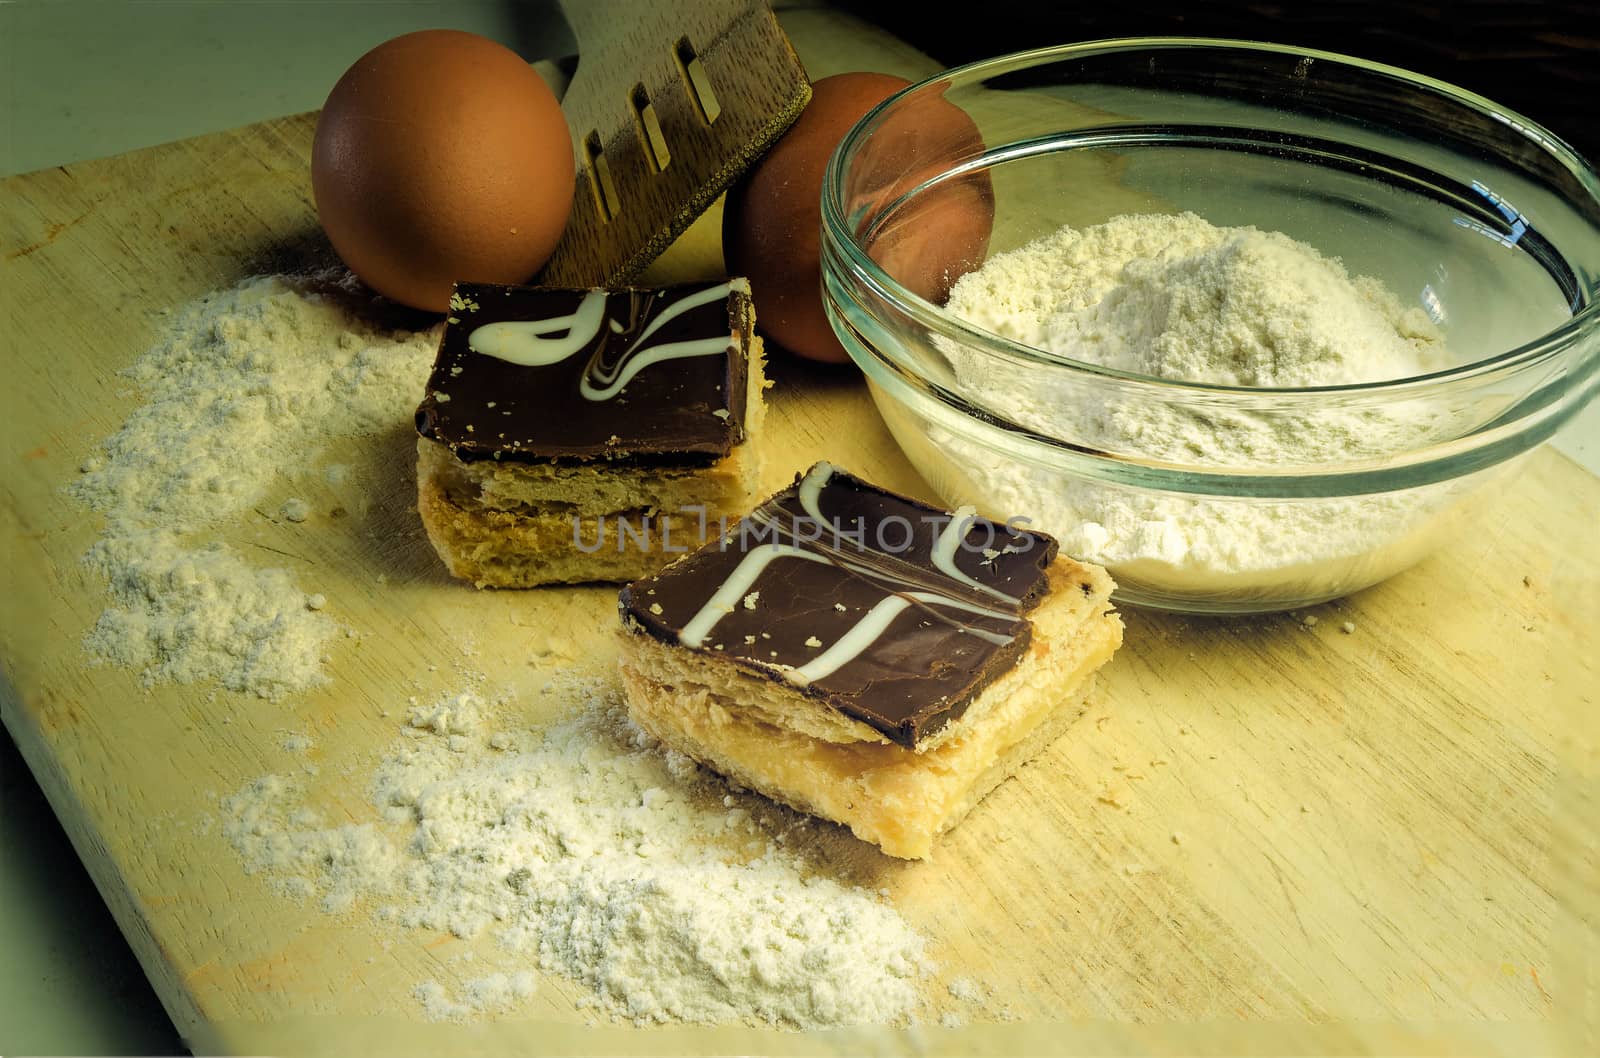 Strudel cake with cream and chocolate by bpardofotografia